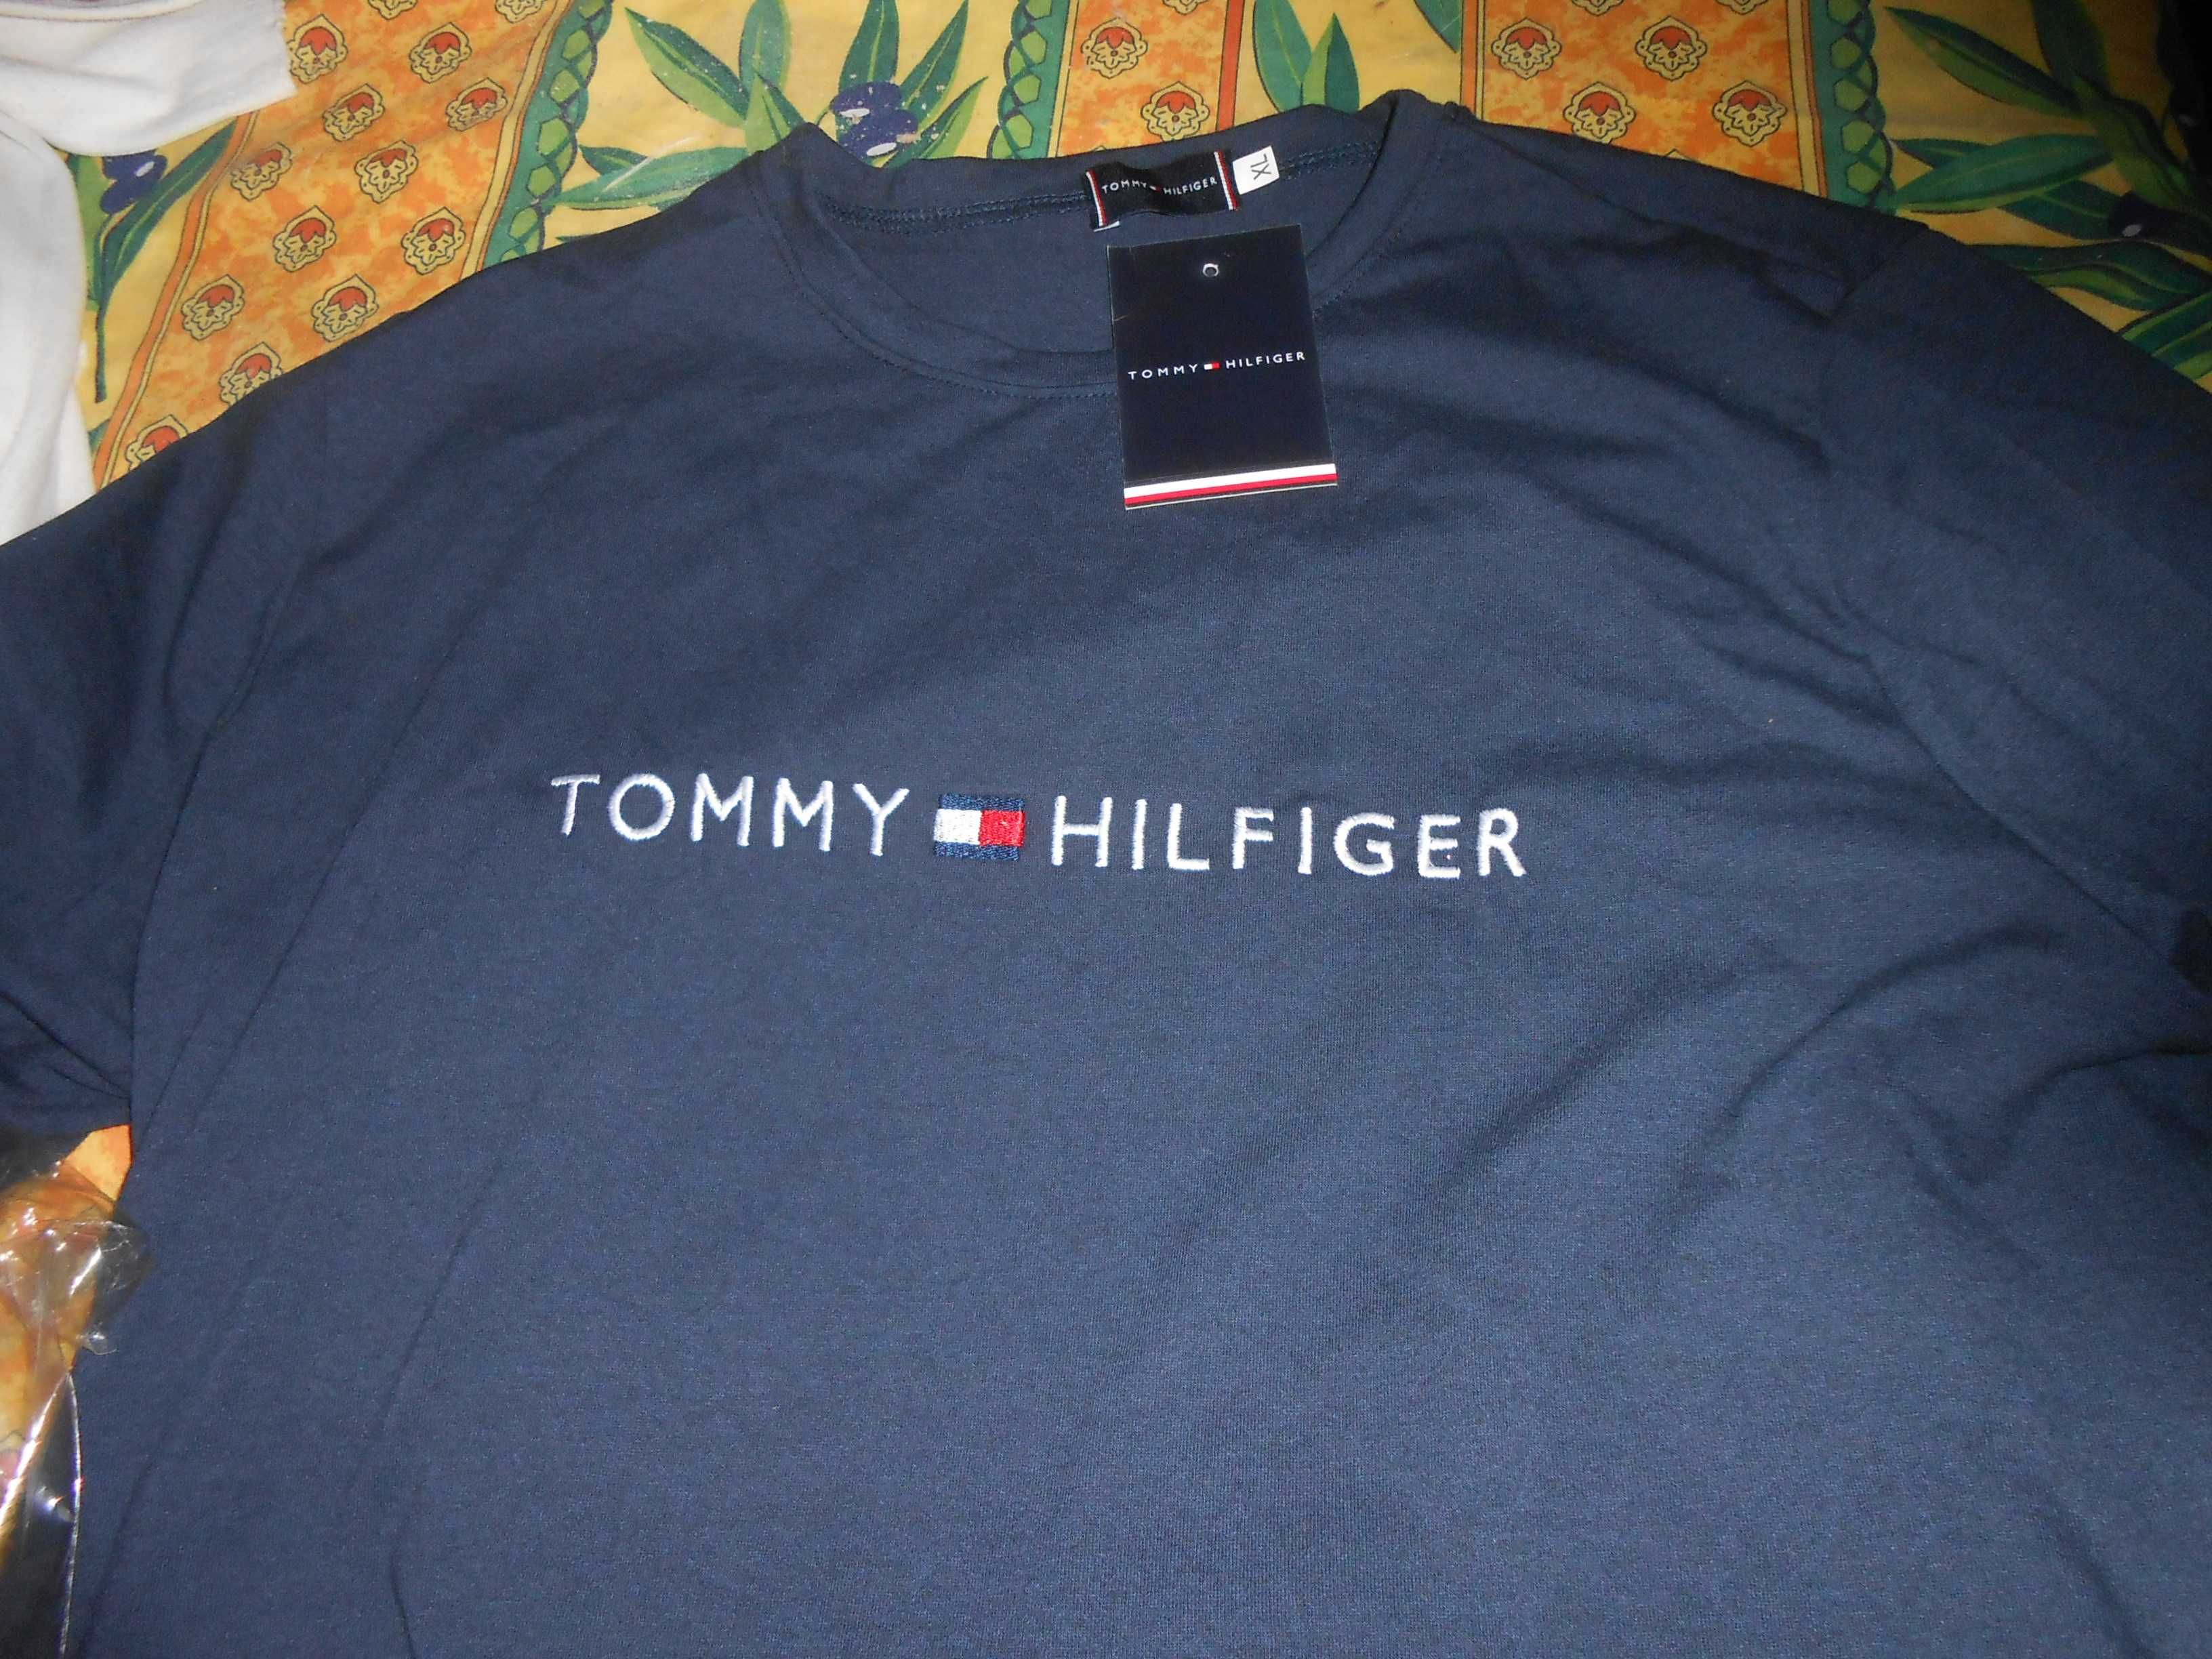 Tee shirt Tommy Hilfiger tamanho XL nova